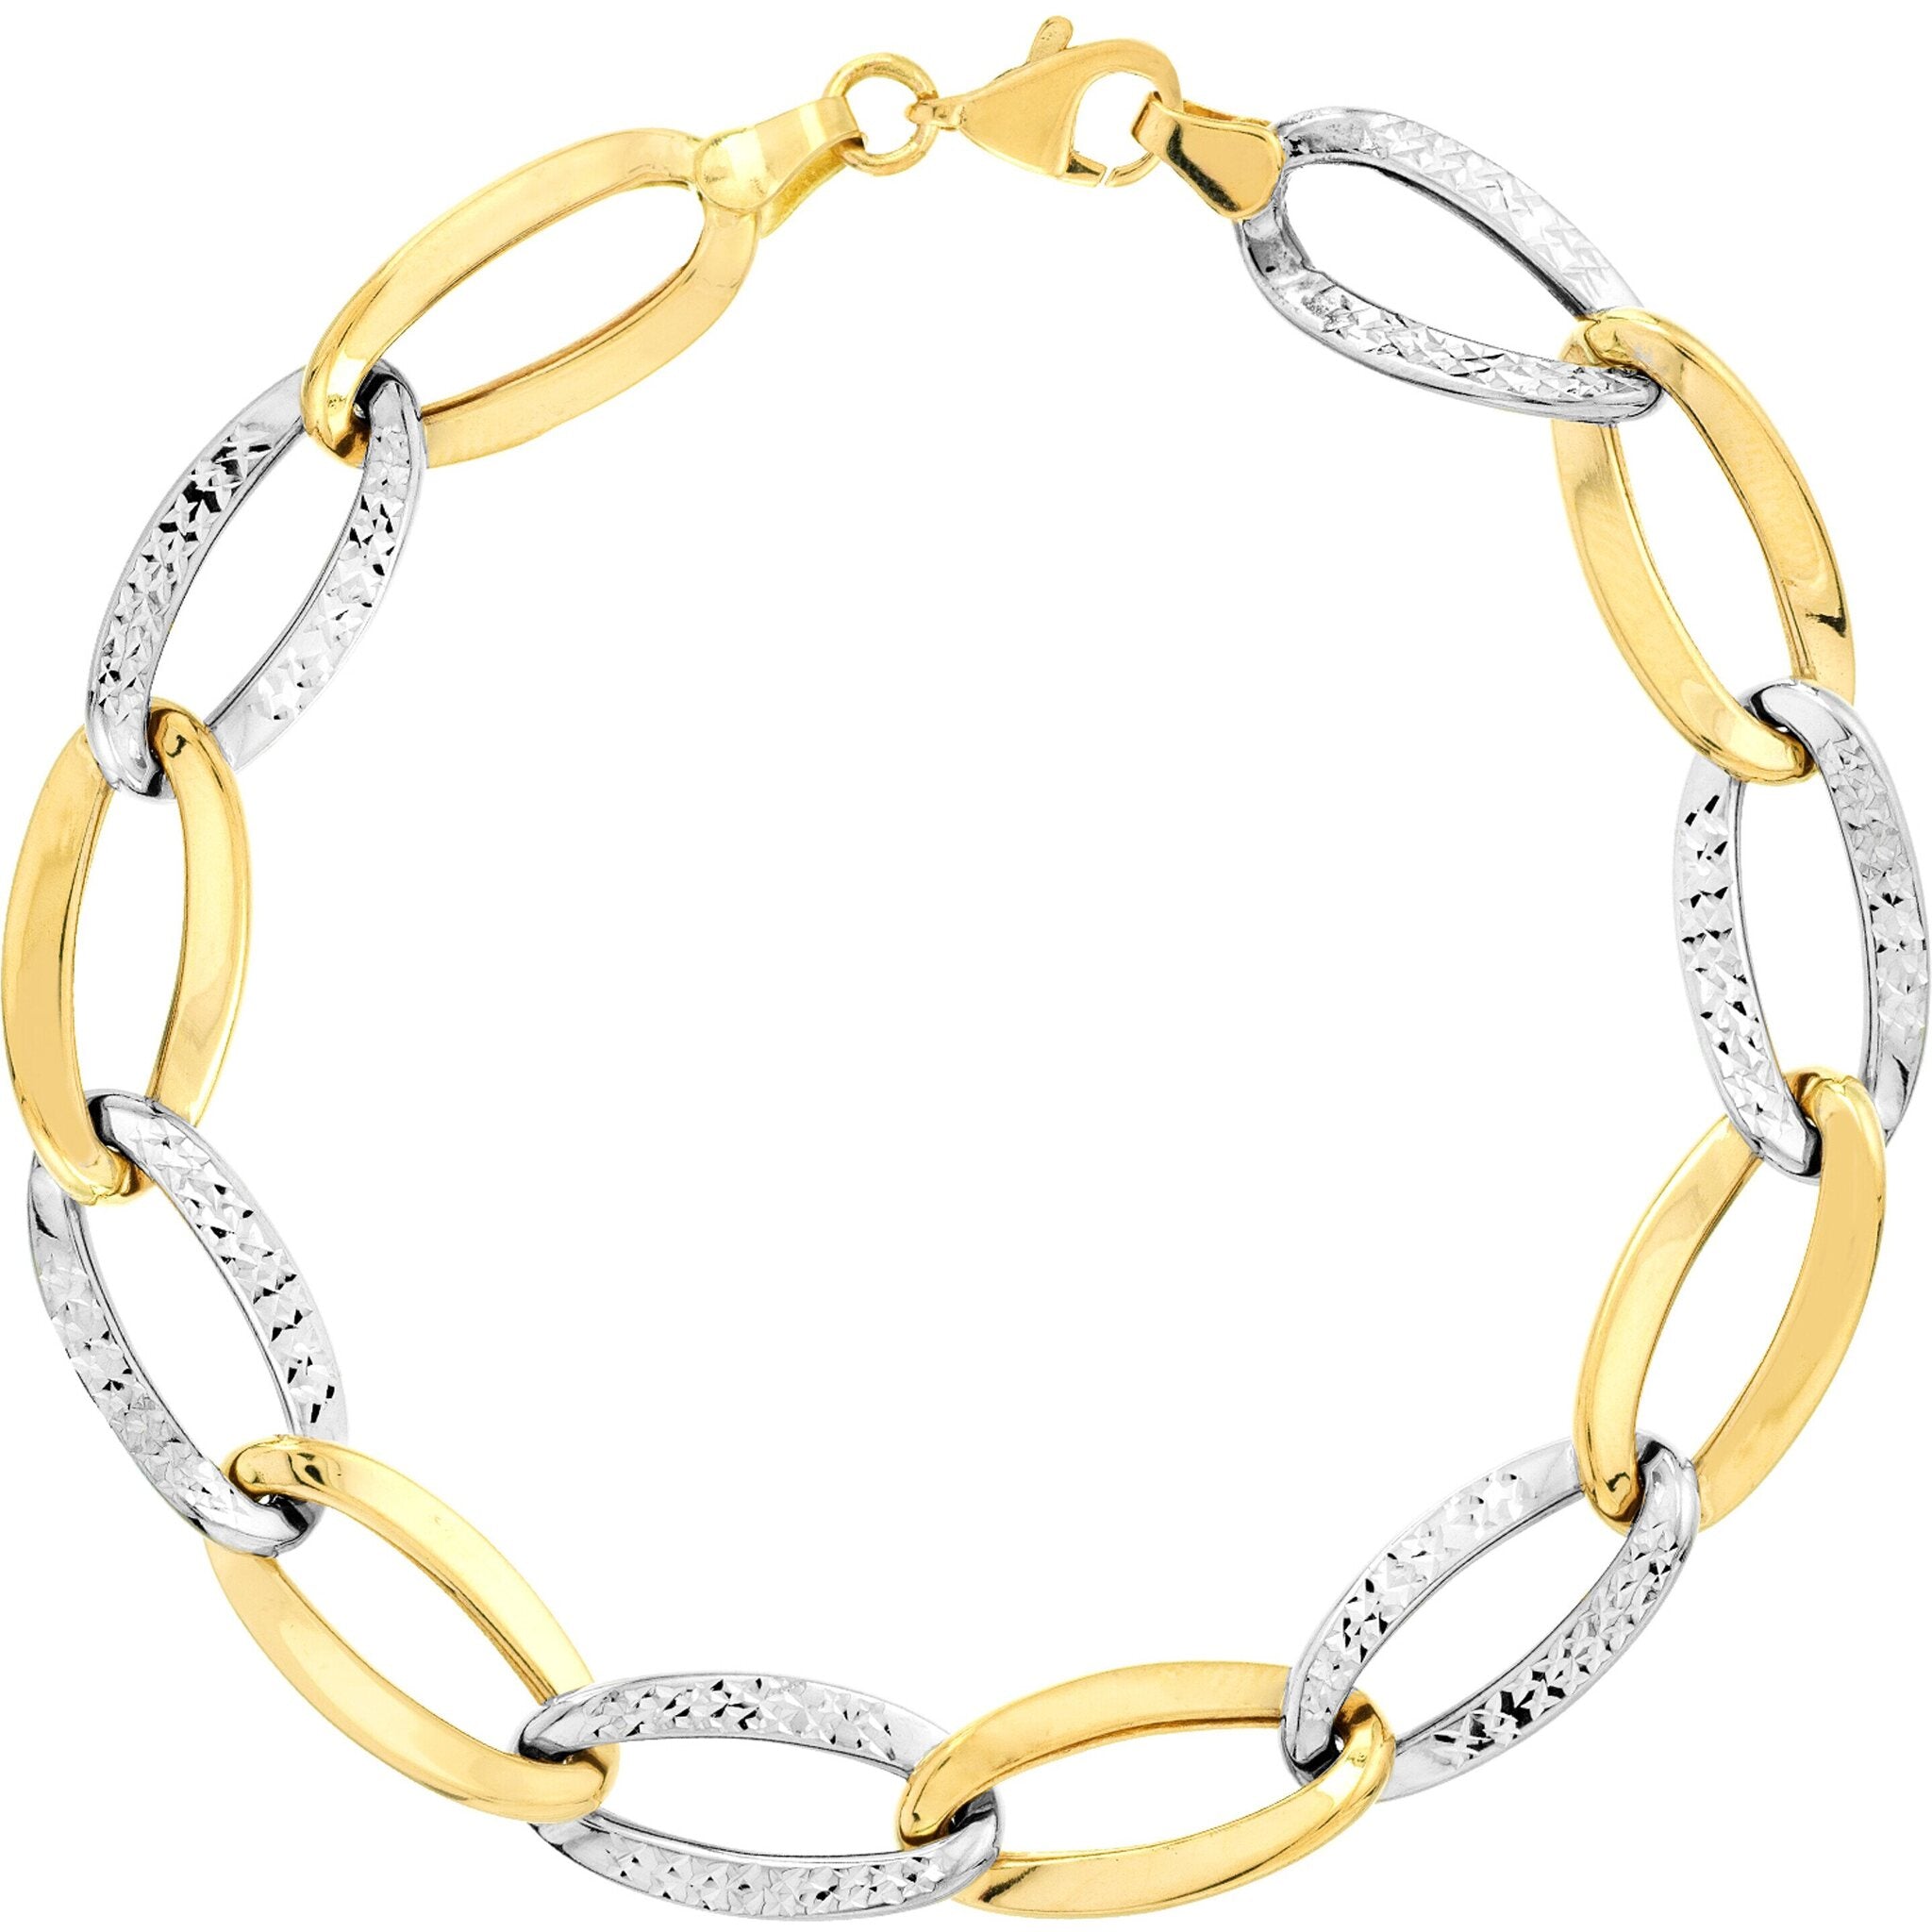 Gold Chain Coin Malabar Gold Bracelet Designs For Women And Men